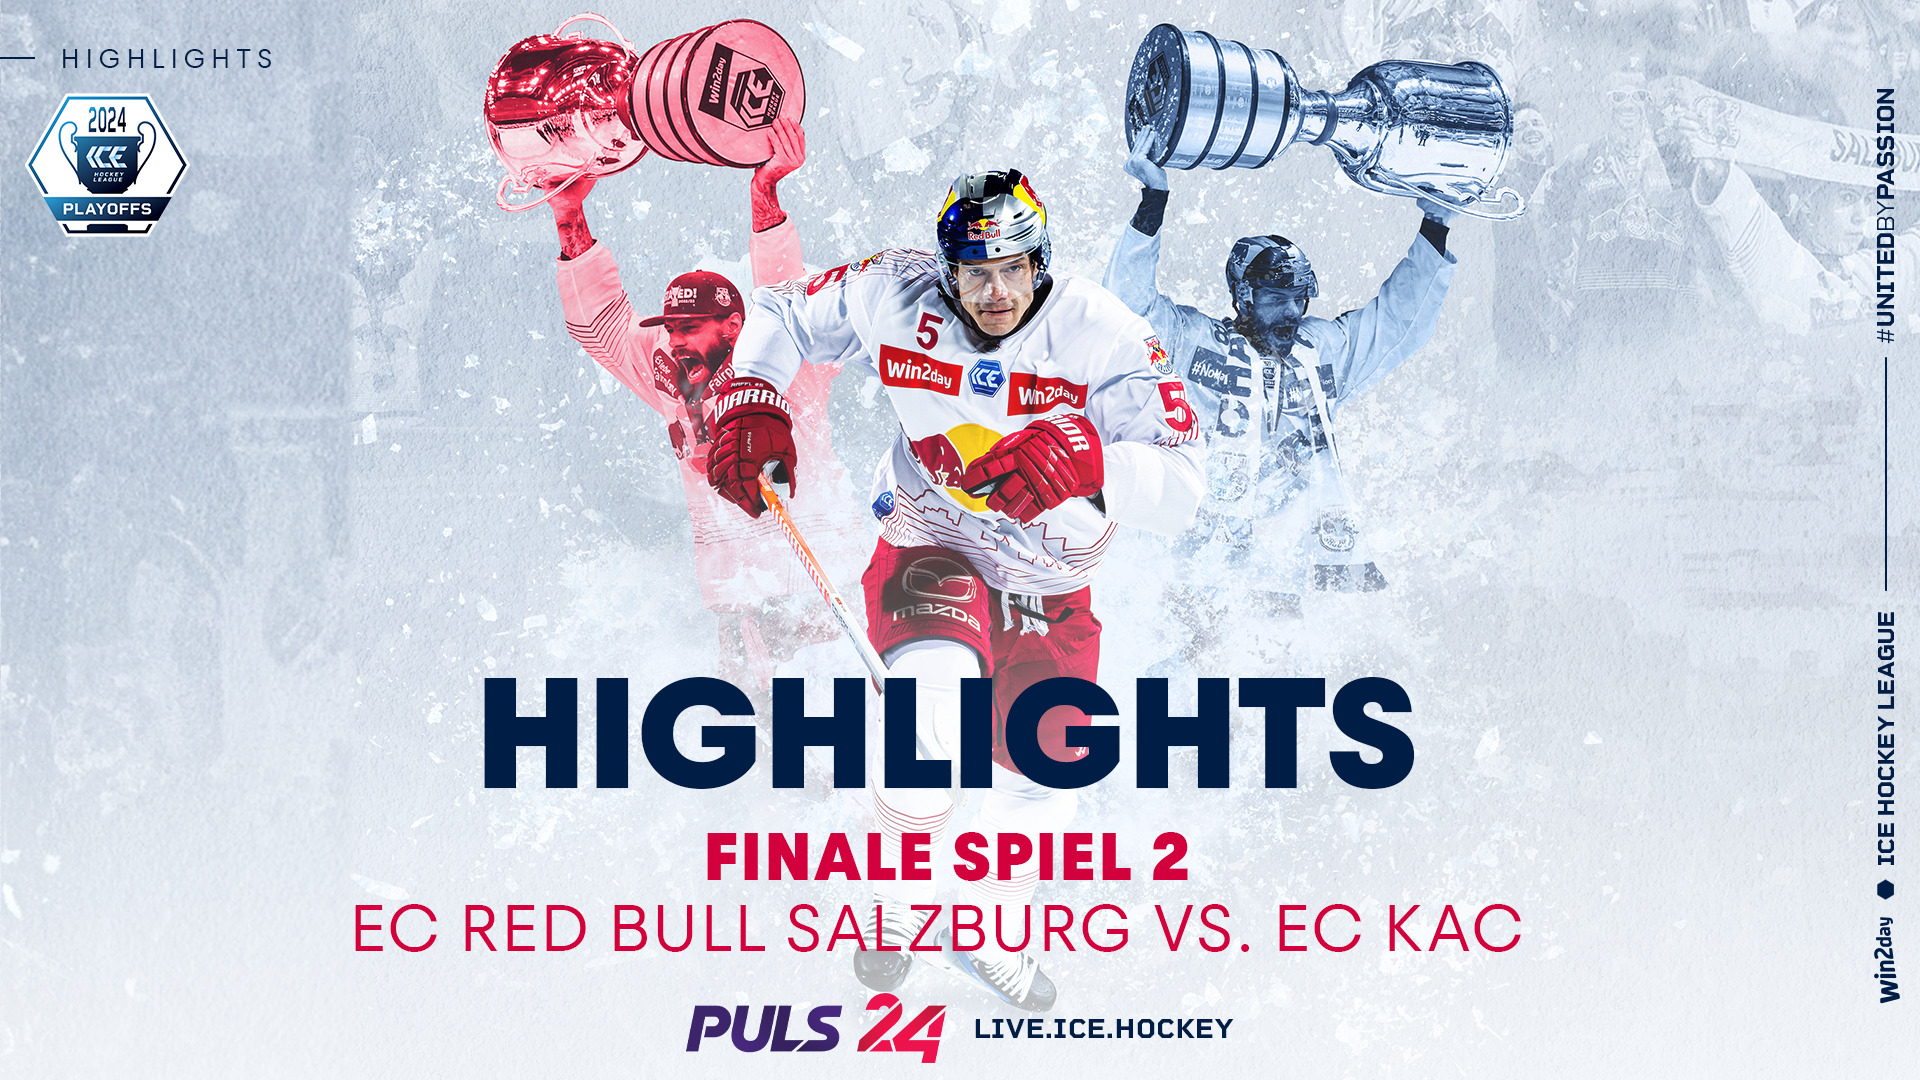 Highlights Finale 2: EC Red Bull Salzburg vs. EC KAC